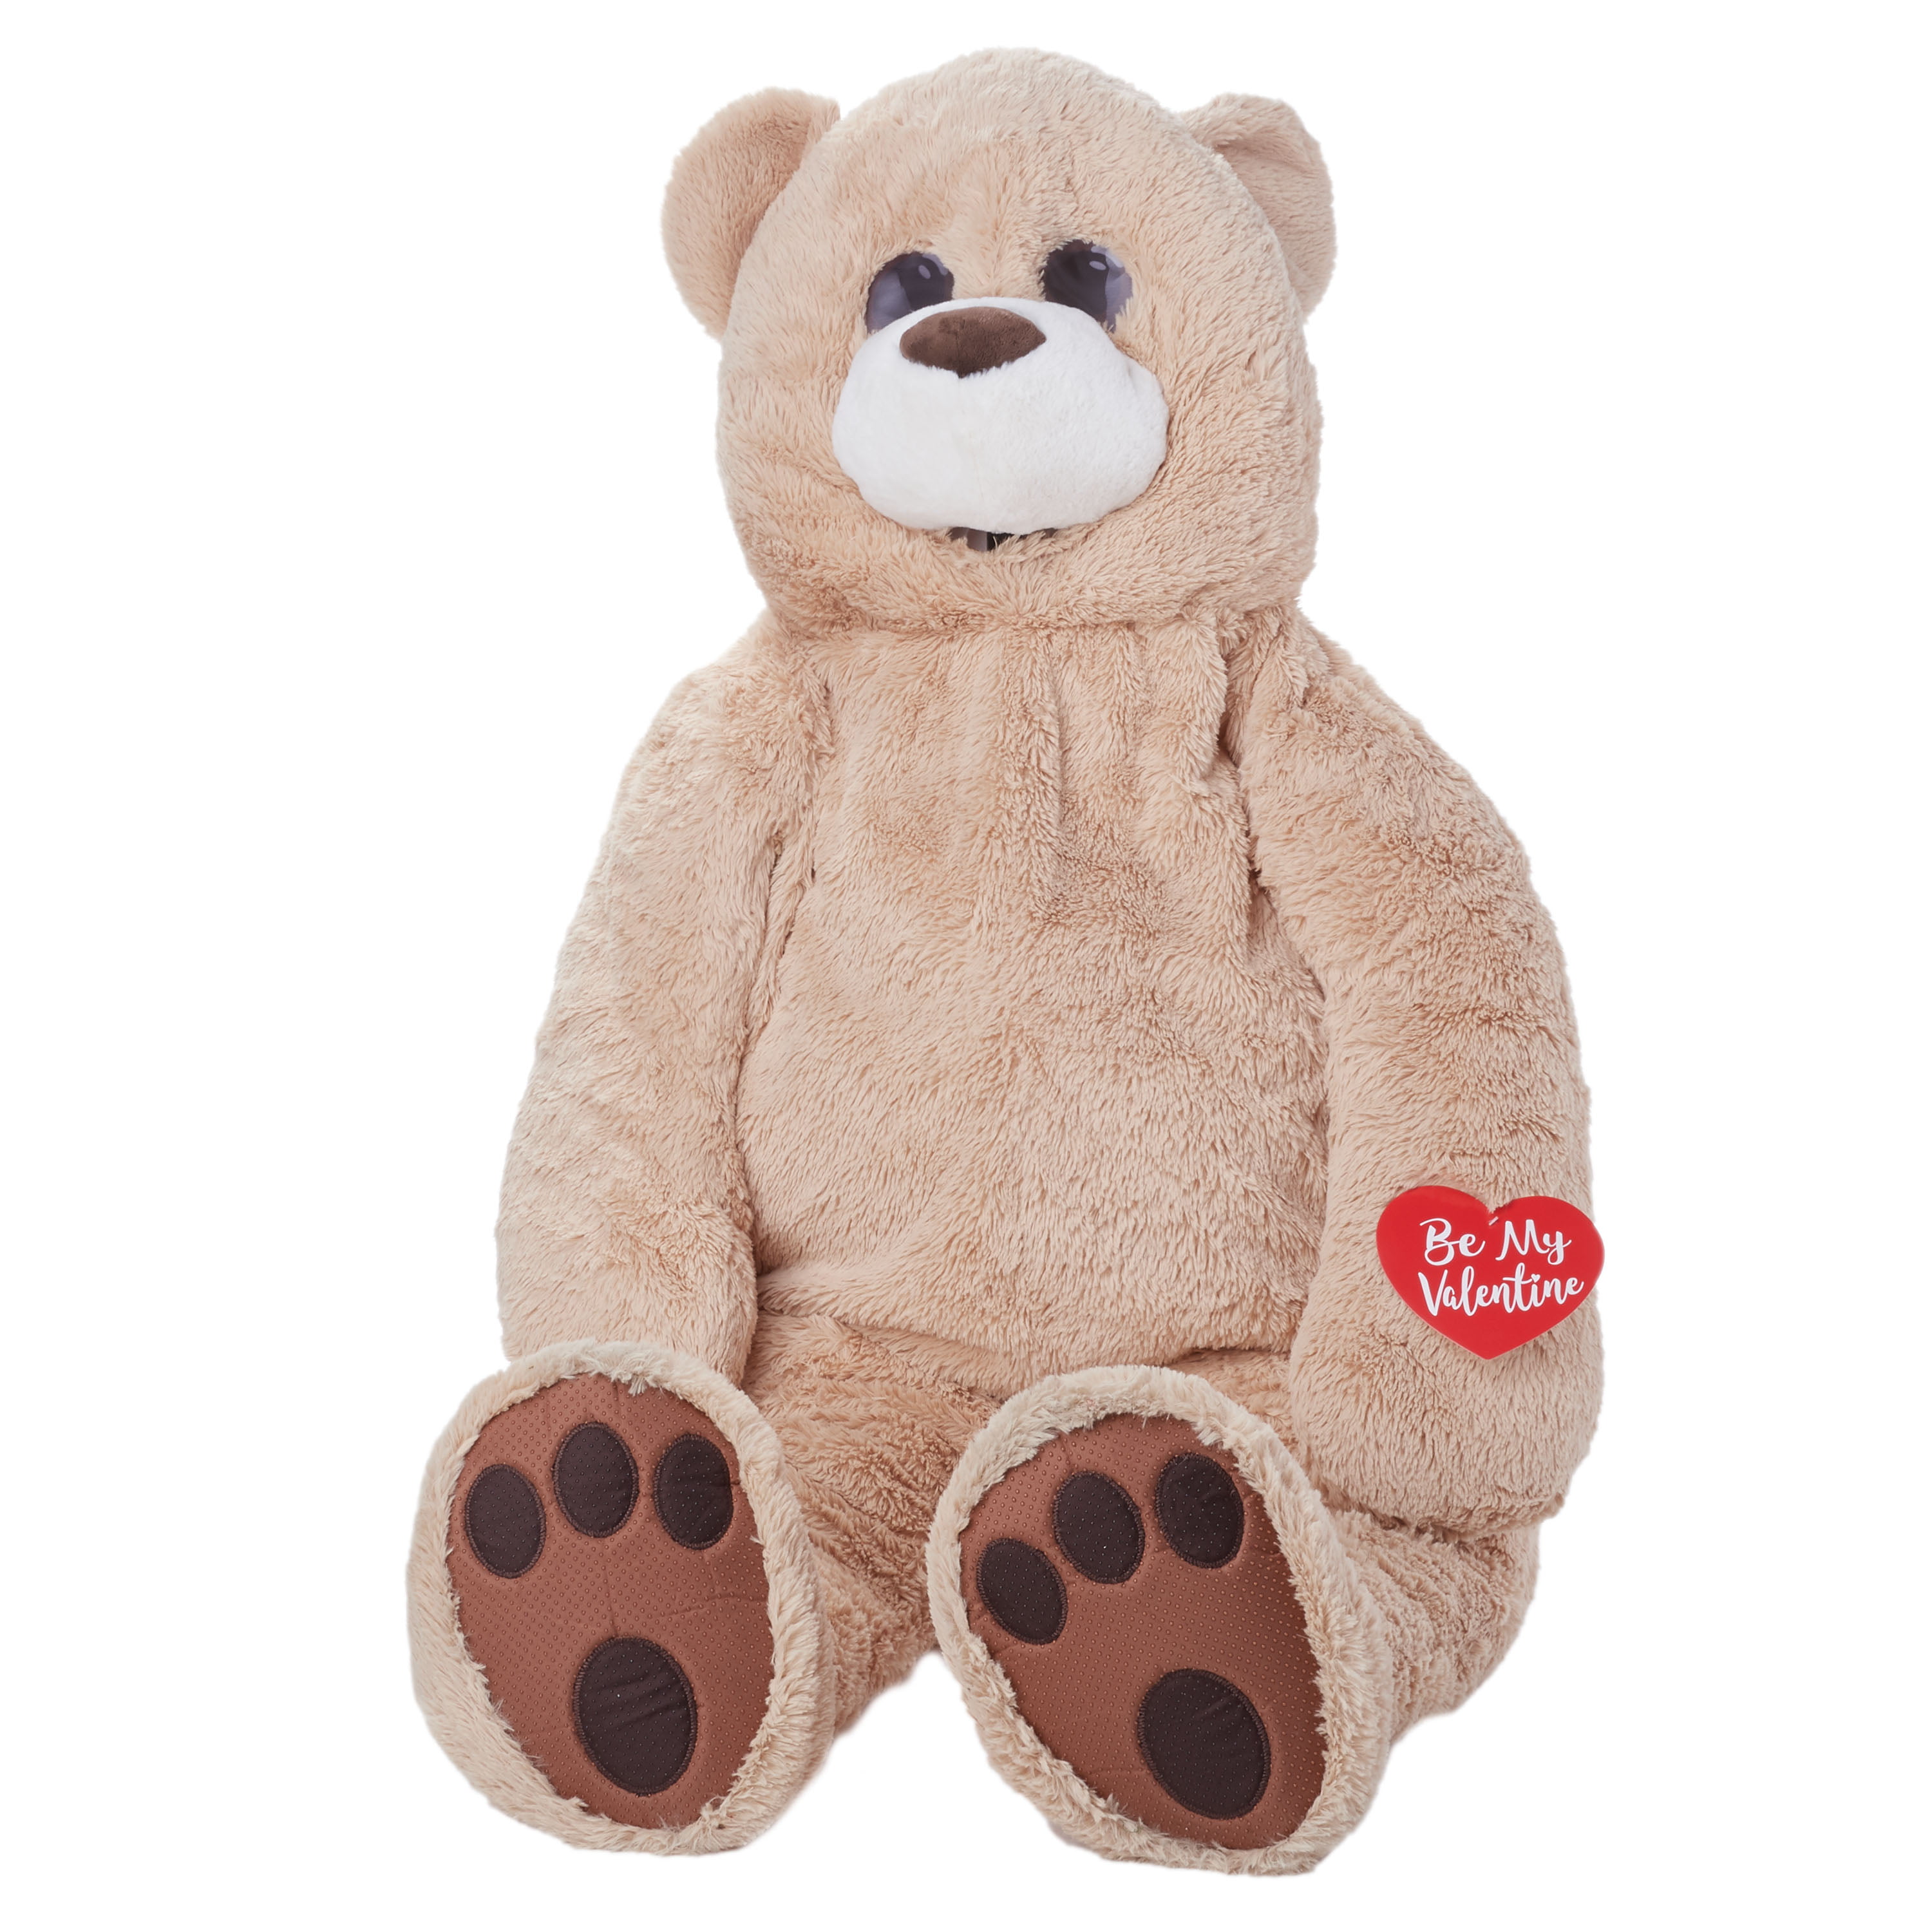 where to buy giant teddy bear costume